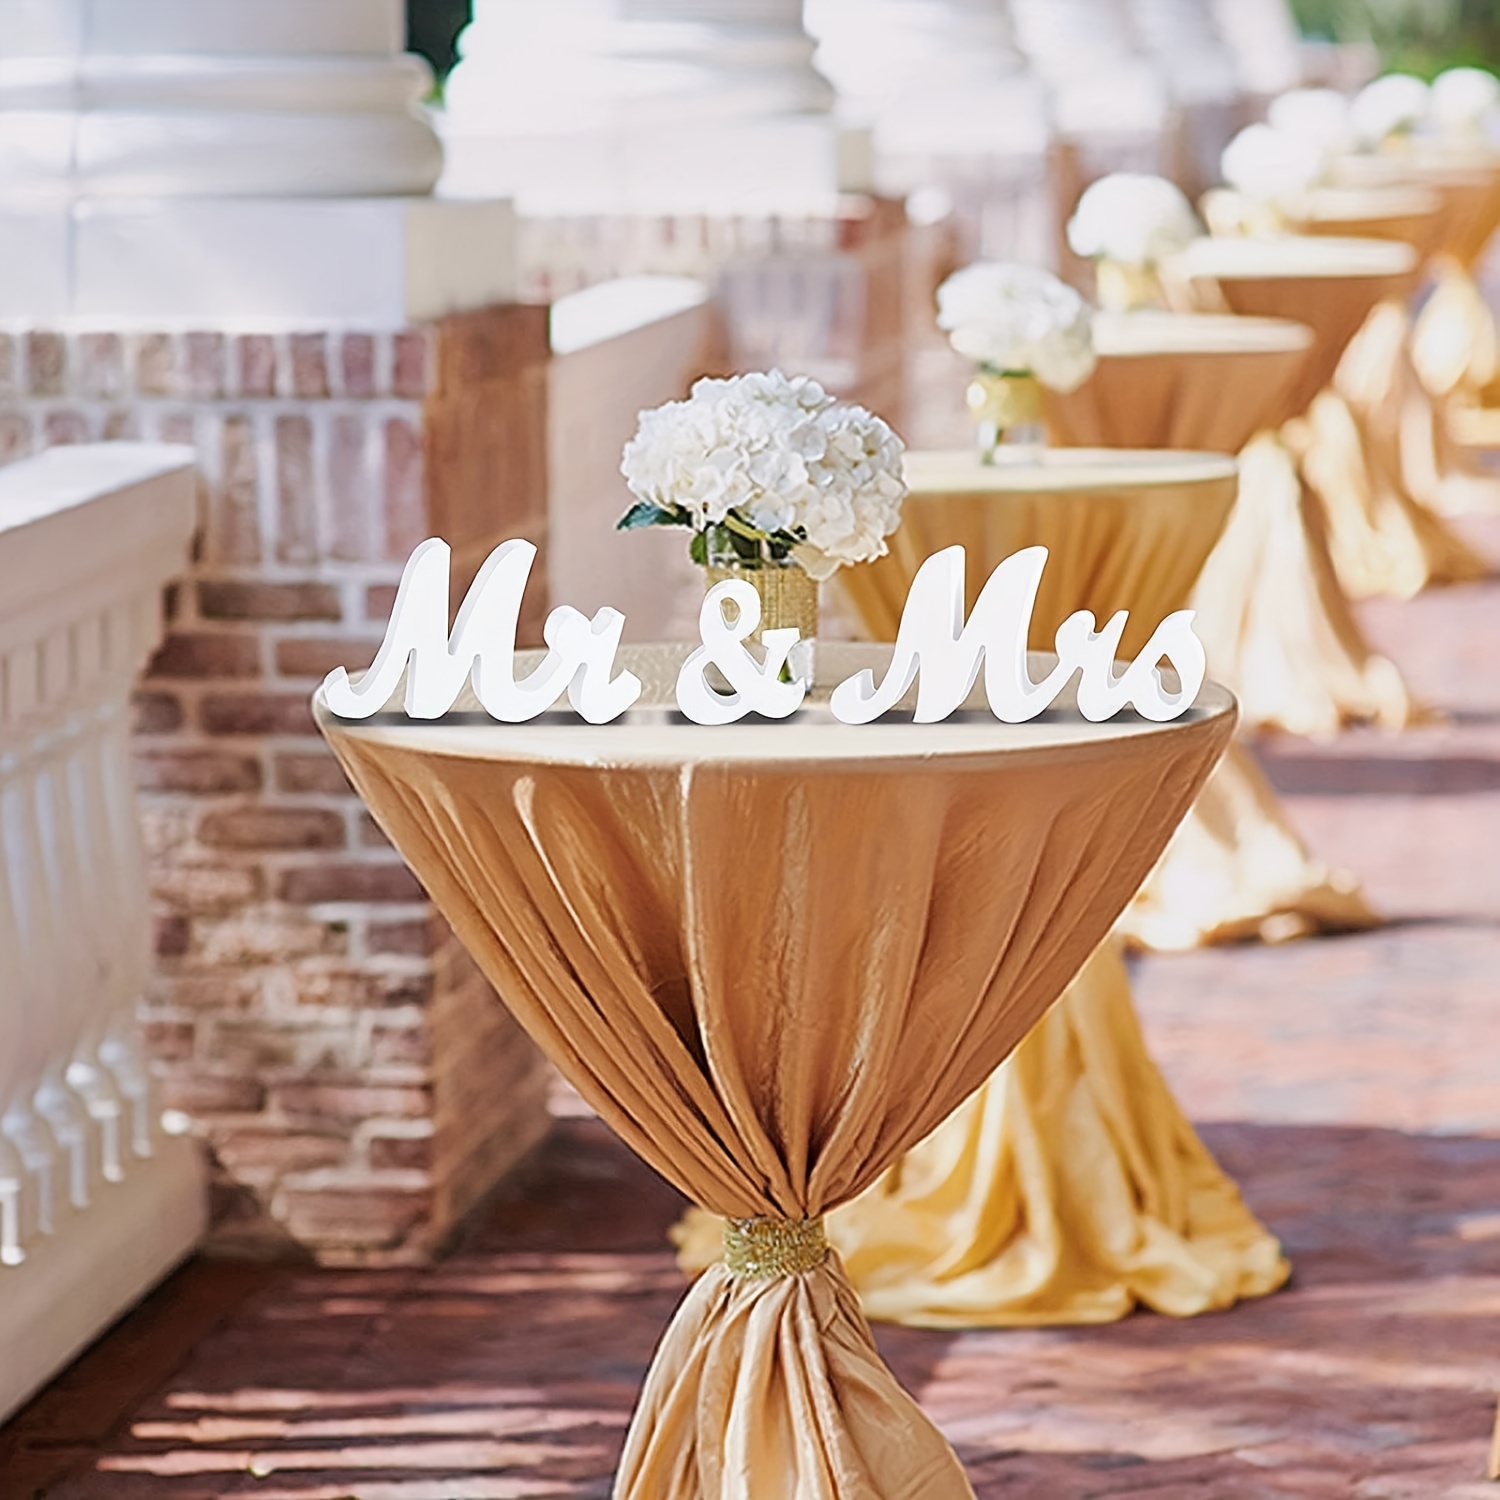 Letras gigantes de madera para boda blanca desgastada decoración